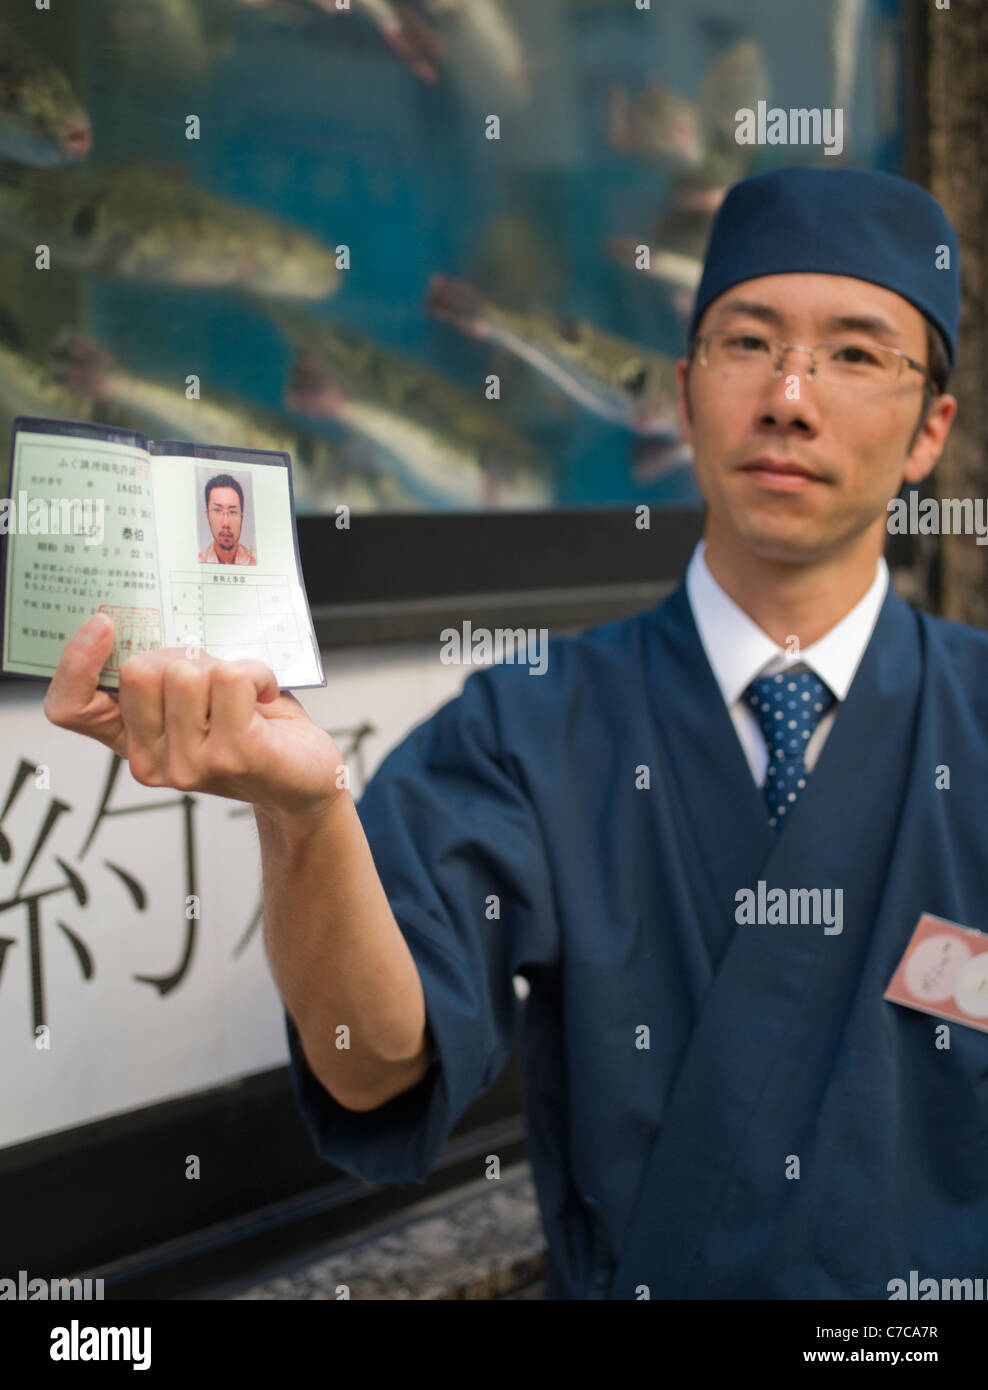 A Japanese Fugu chef shows his Fugu license outside the Shinjuku, Tokyo fugu restaurant at which he works Stock Photo